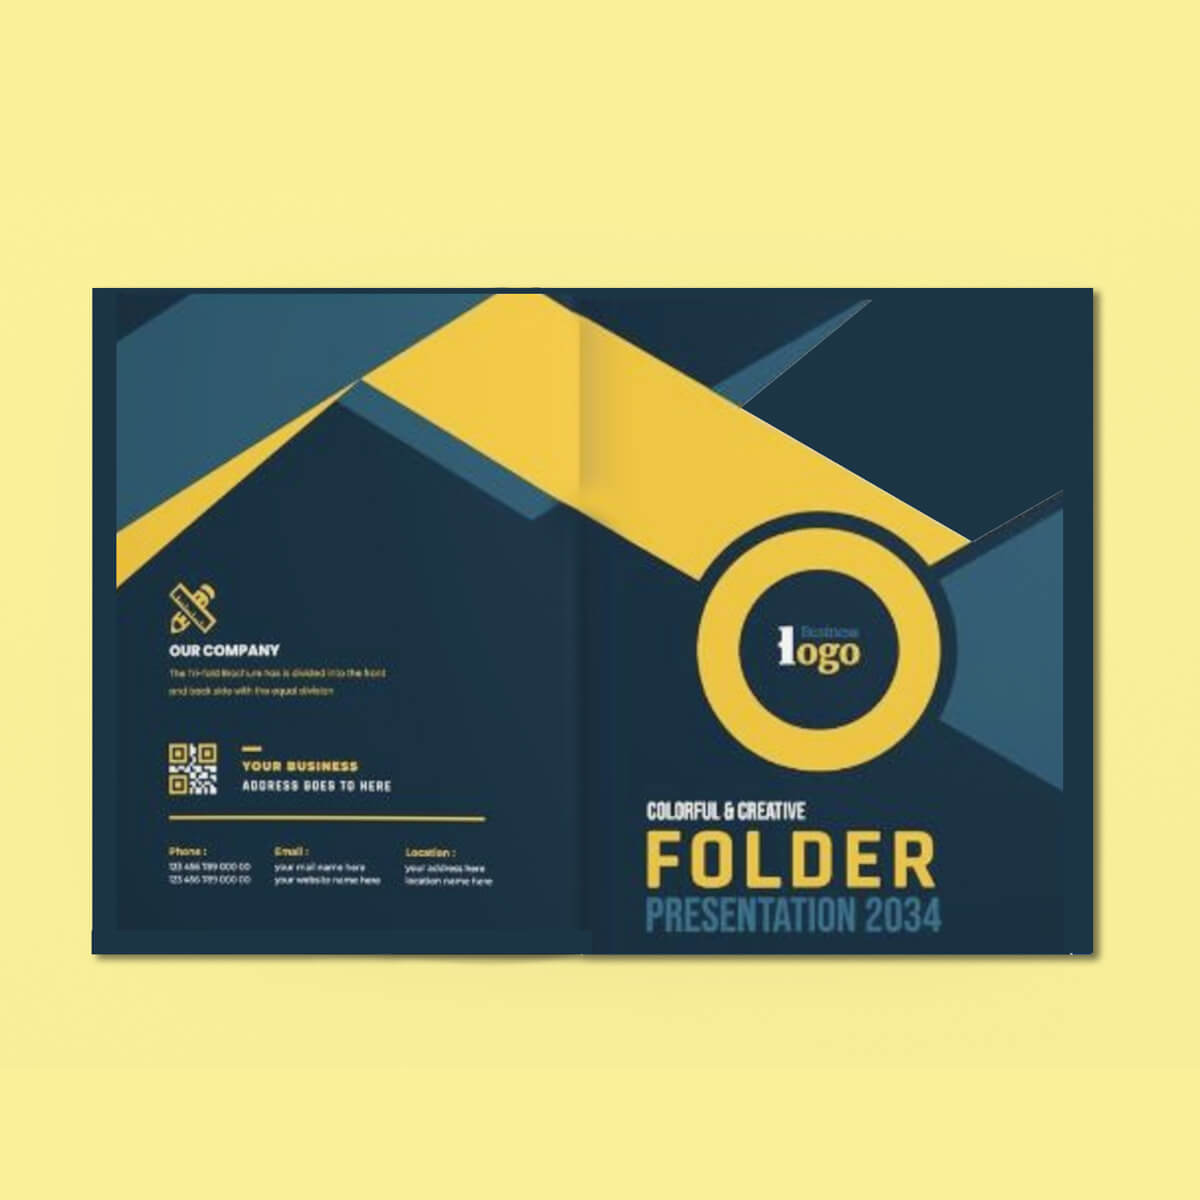 Navy gold imprint paper company pocket folder custom print by Curative Printing